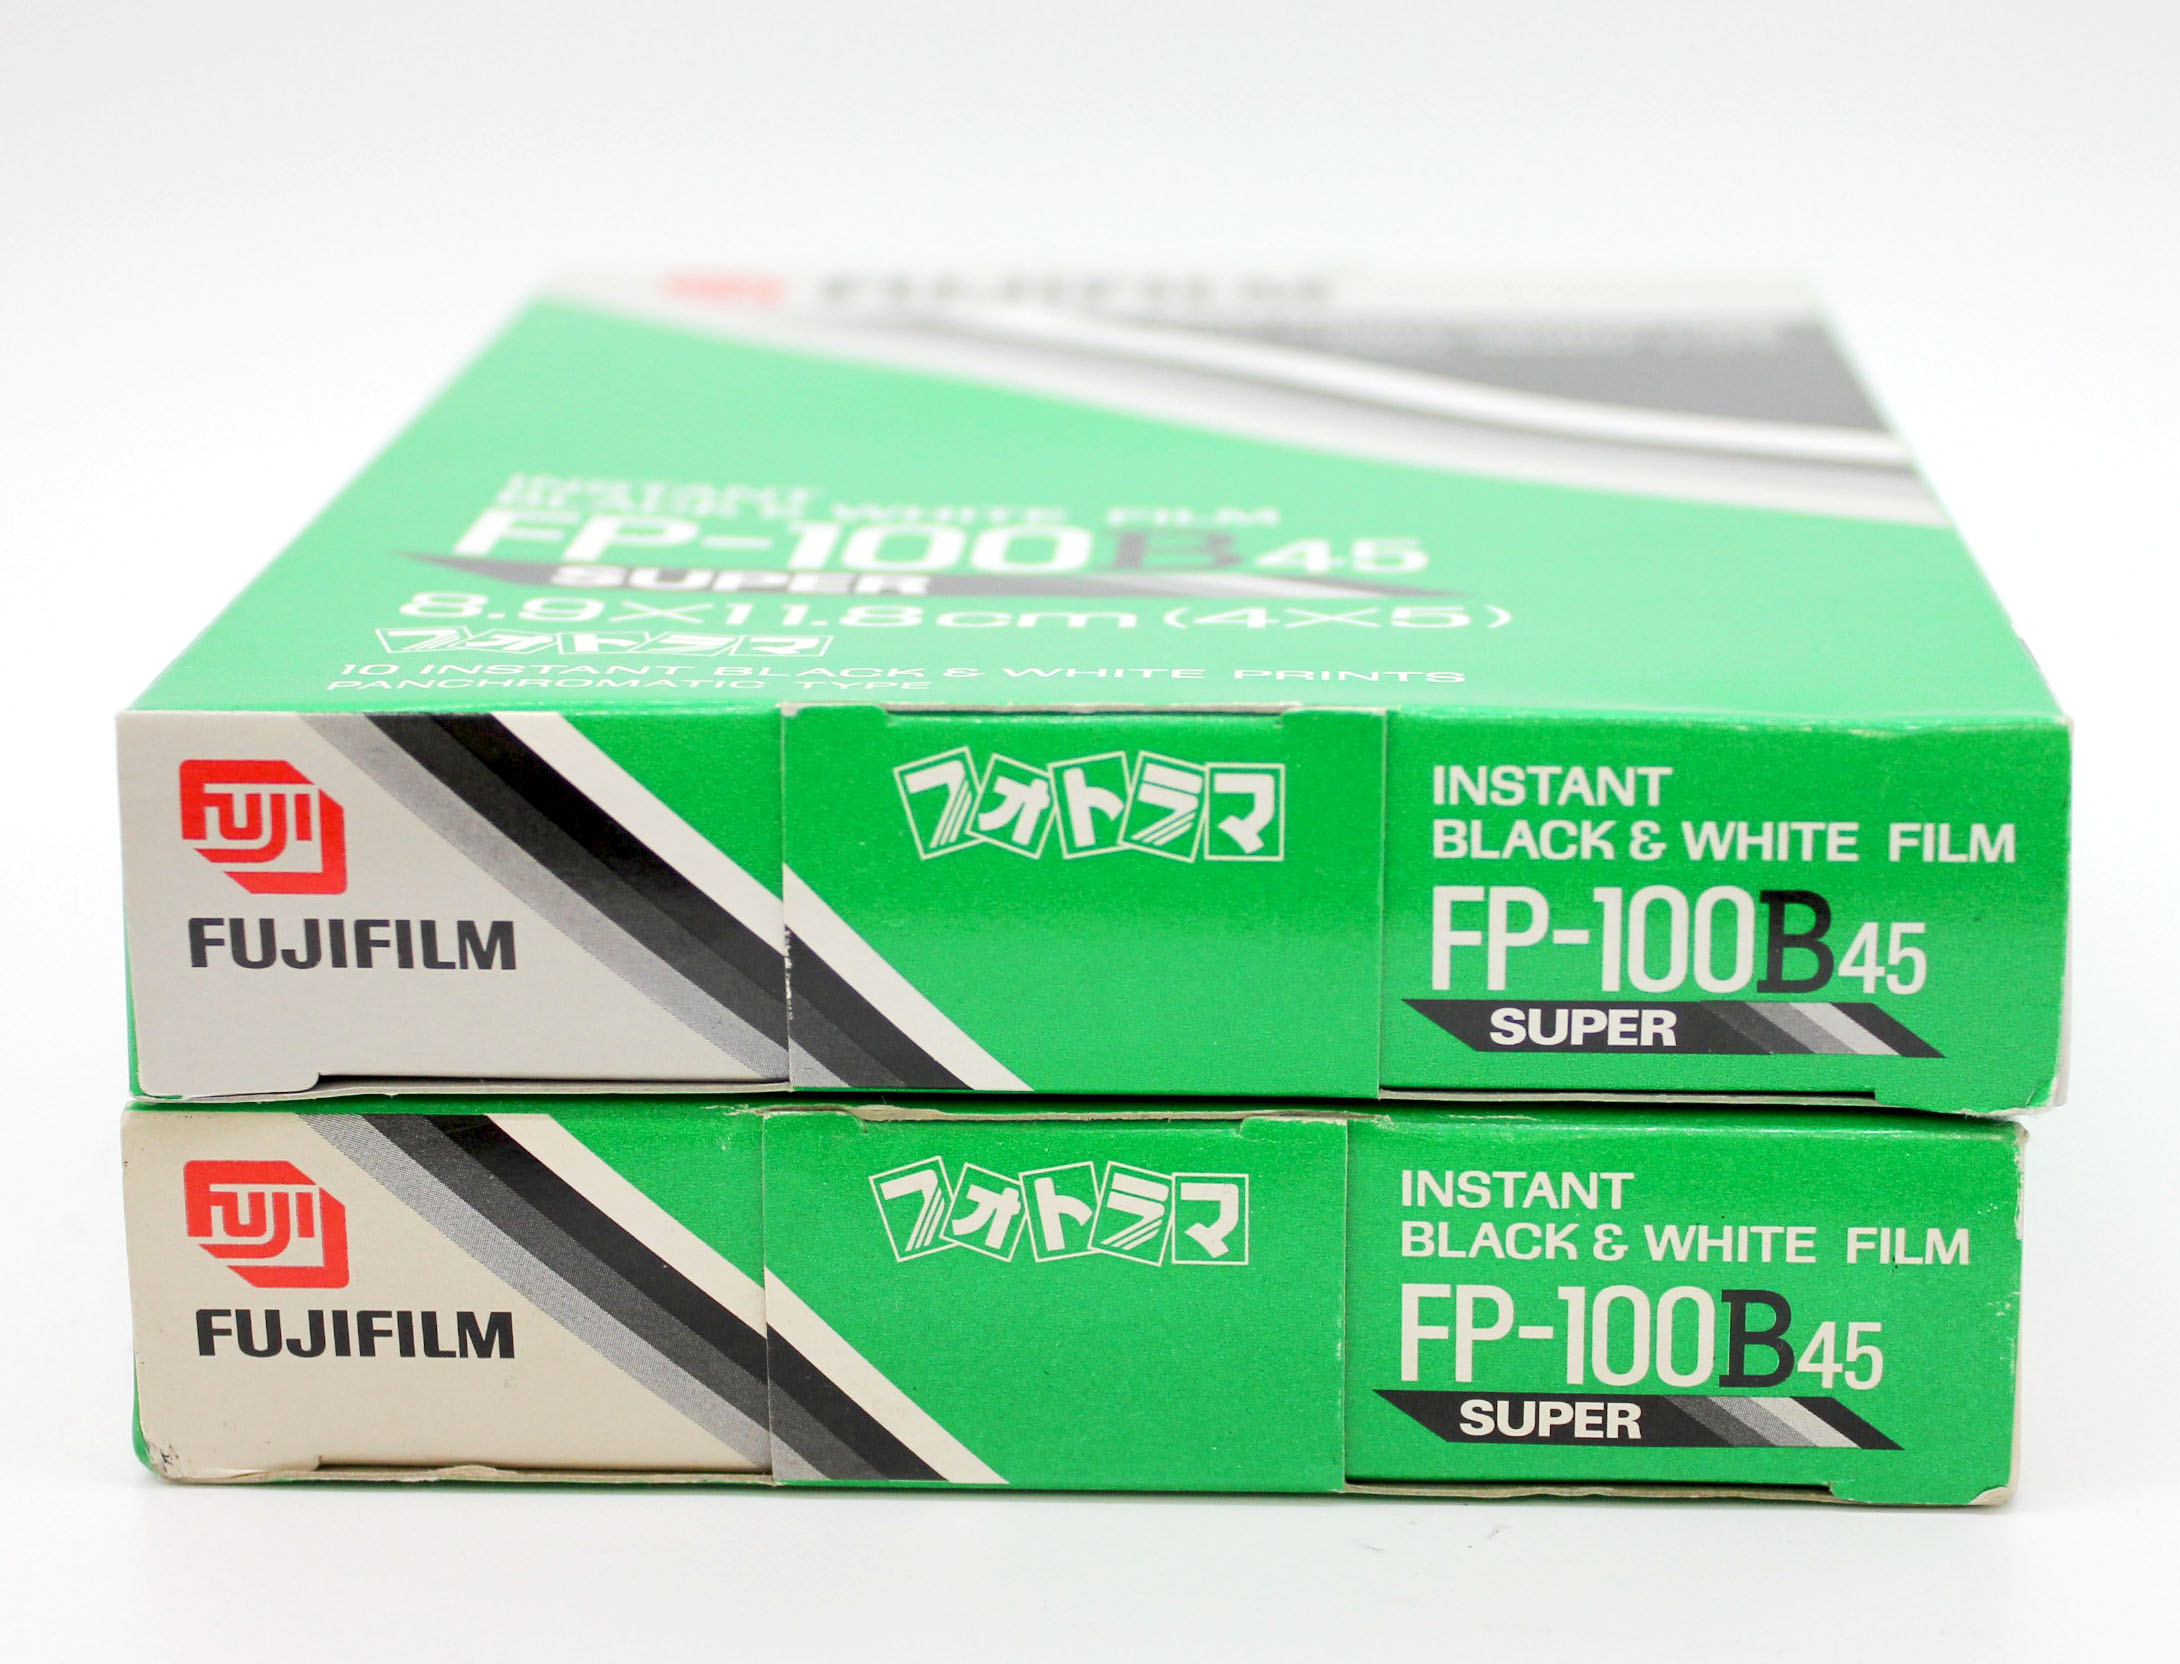  Fuji Fujifilm FP-100B45 4x5 8.9x11.8cm Instant Black & White Film Set of 2 (Expired) Photo 4